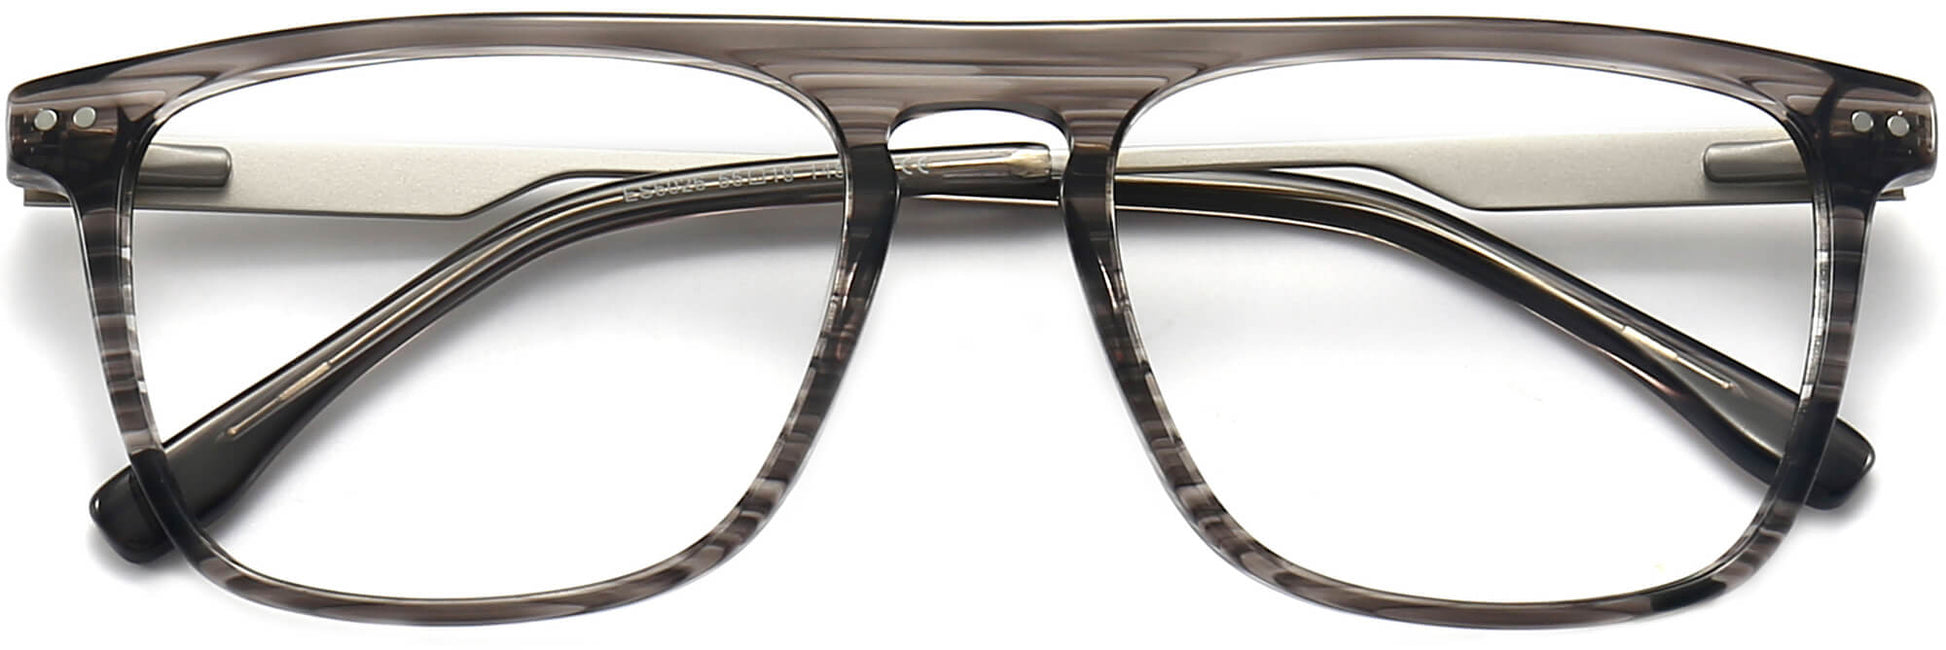 Zain Square Gray Eyeglasses rom ANRRI, closed view